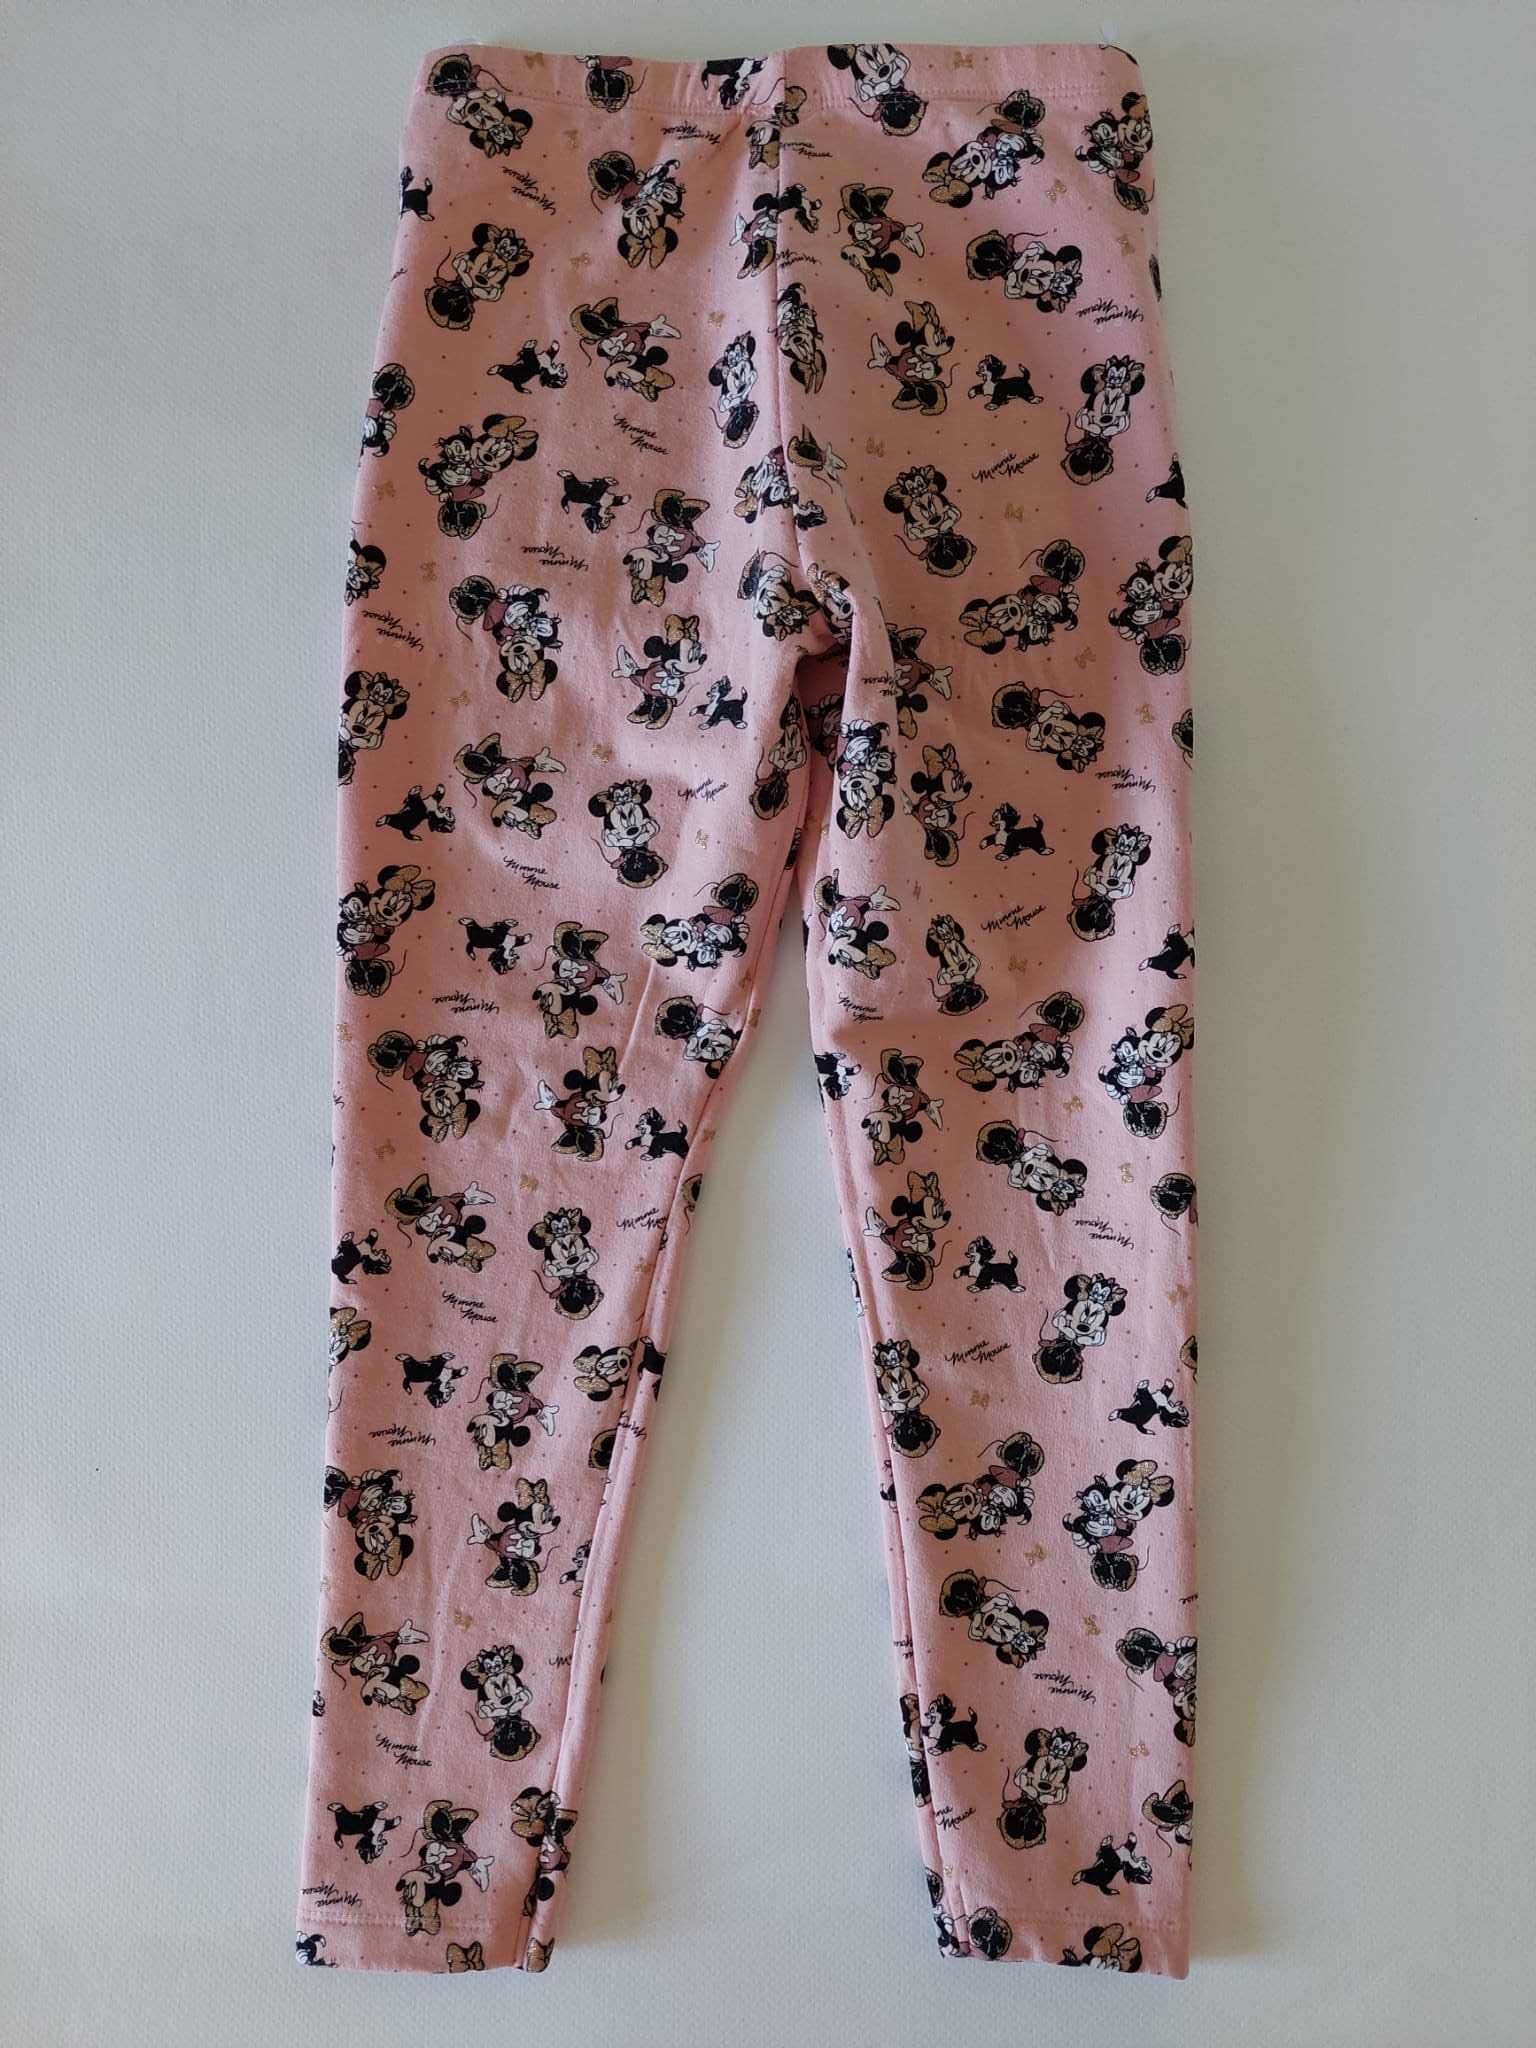 Pantaloni roz prafuit pattern Minnie Mouse, colectia Disney, C&A